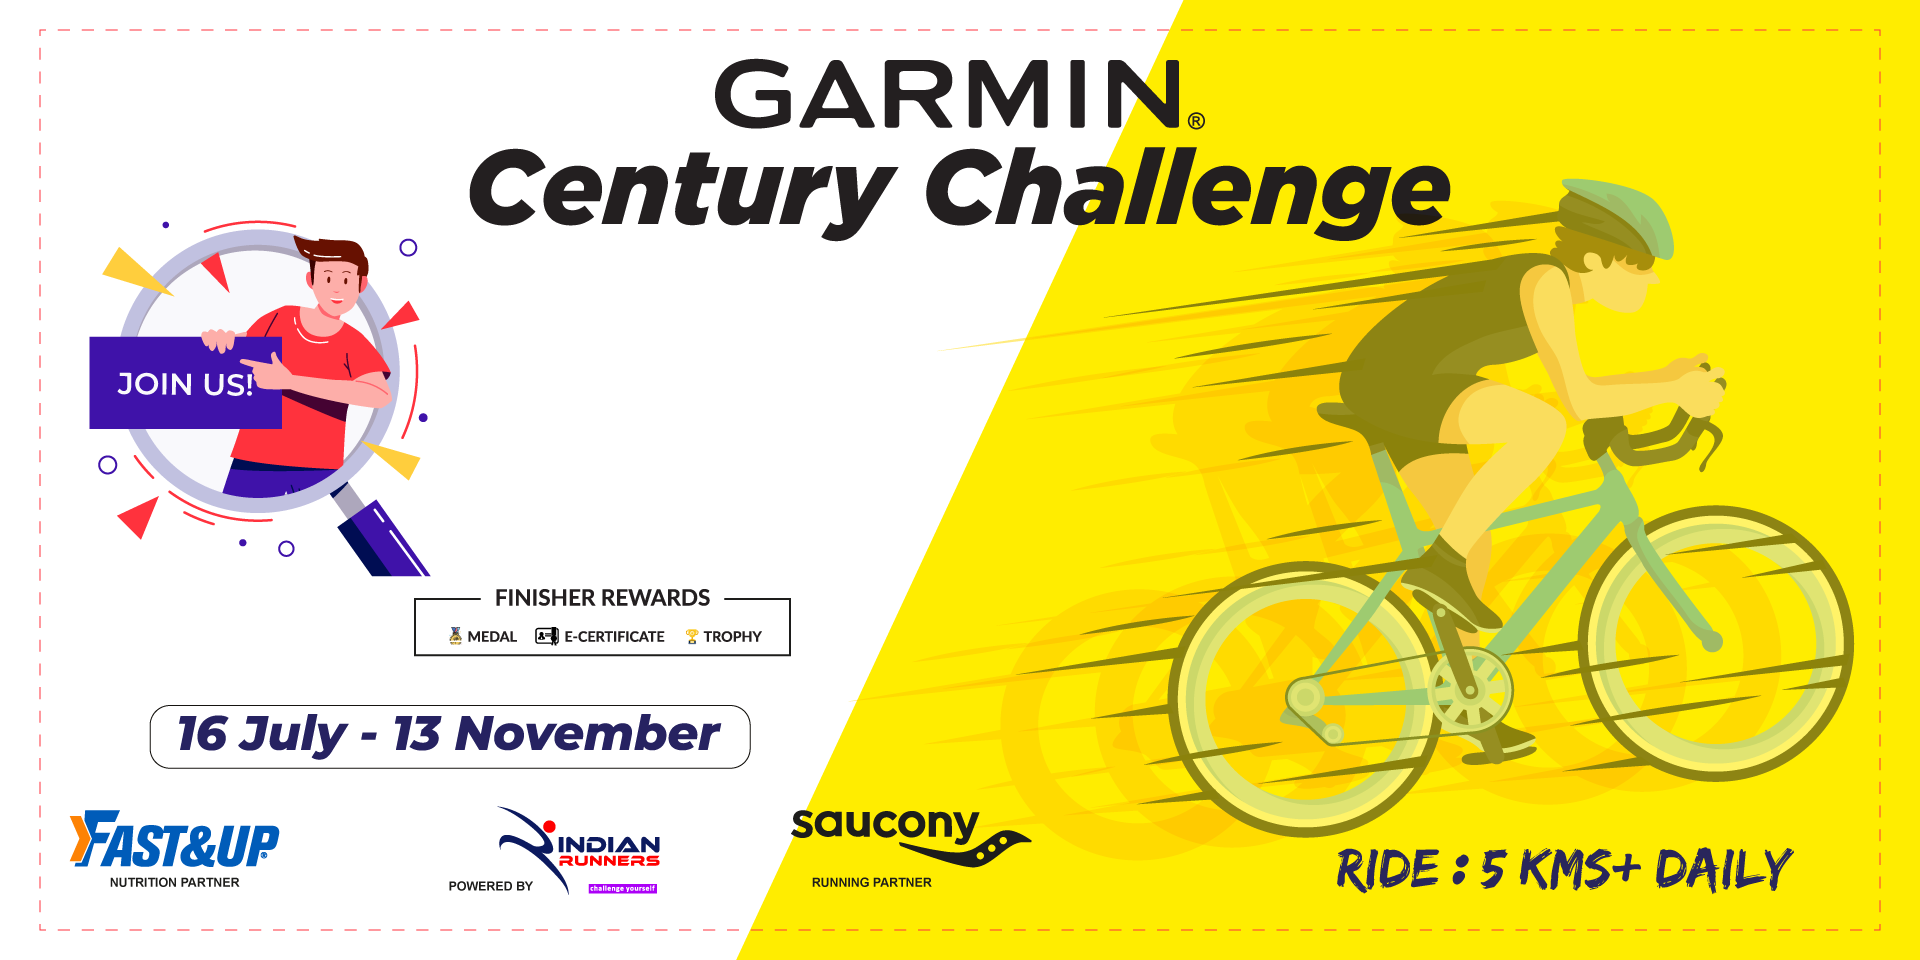 Garmin Century Challenge 2022 image